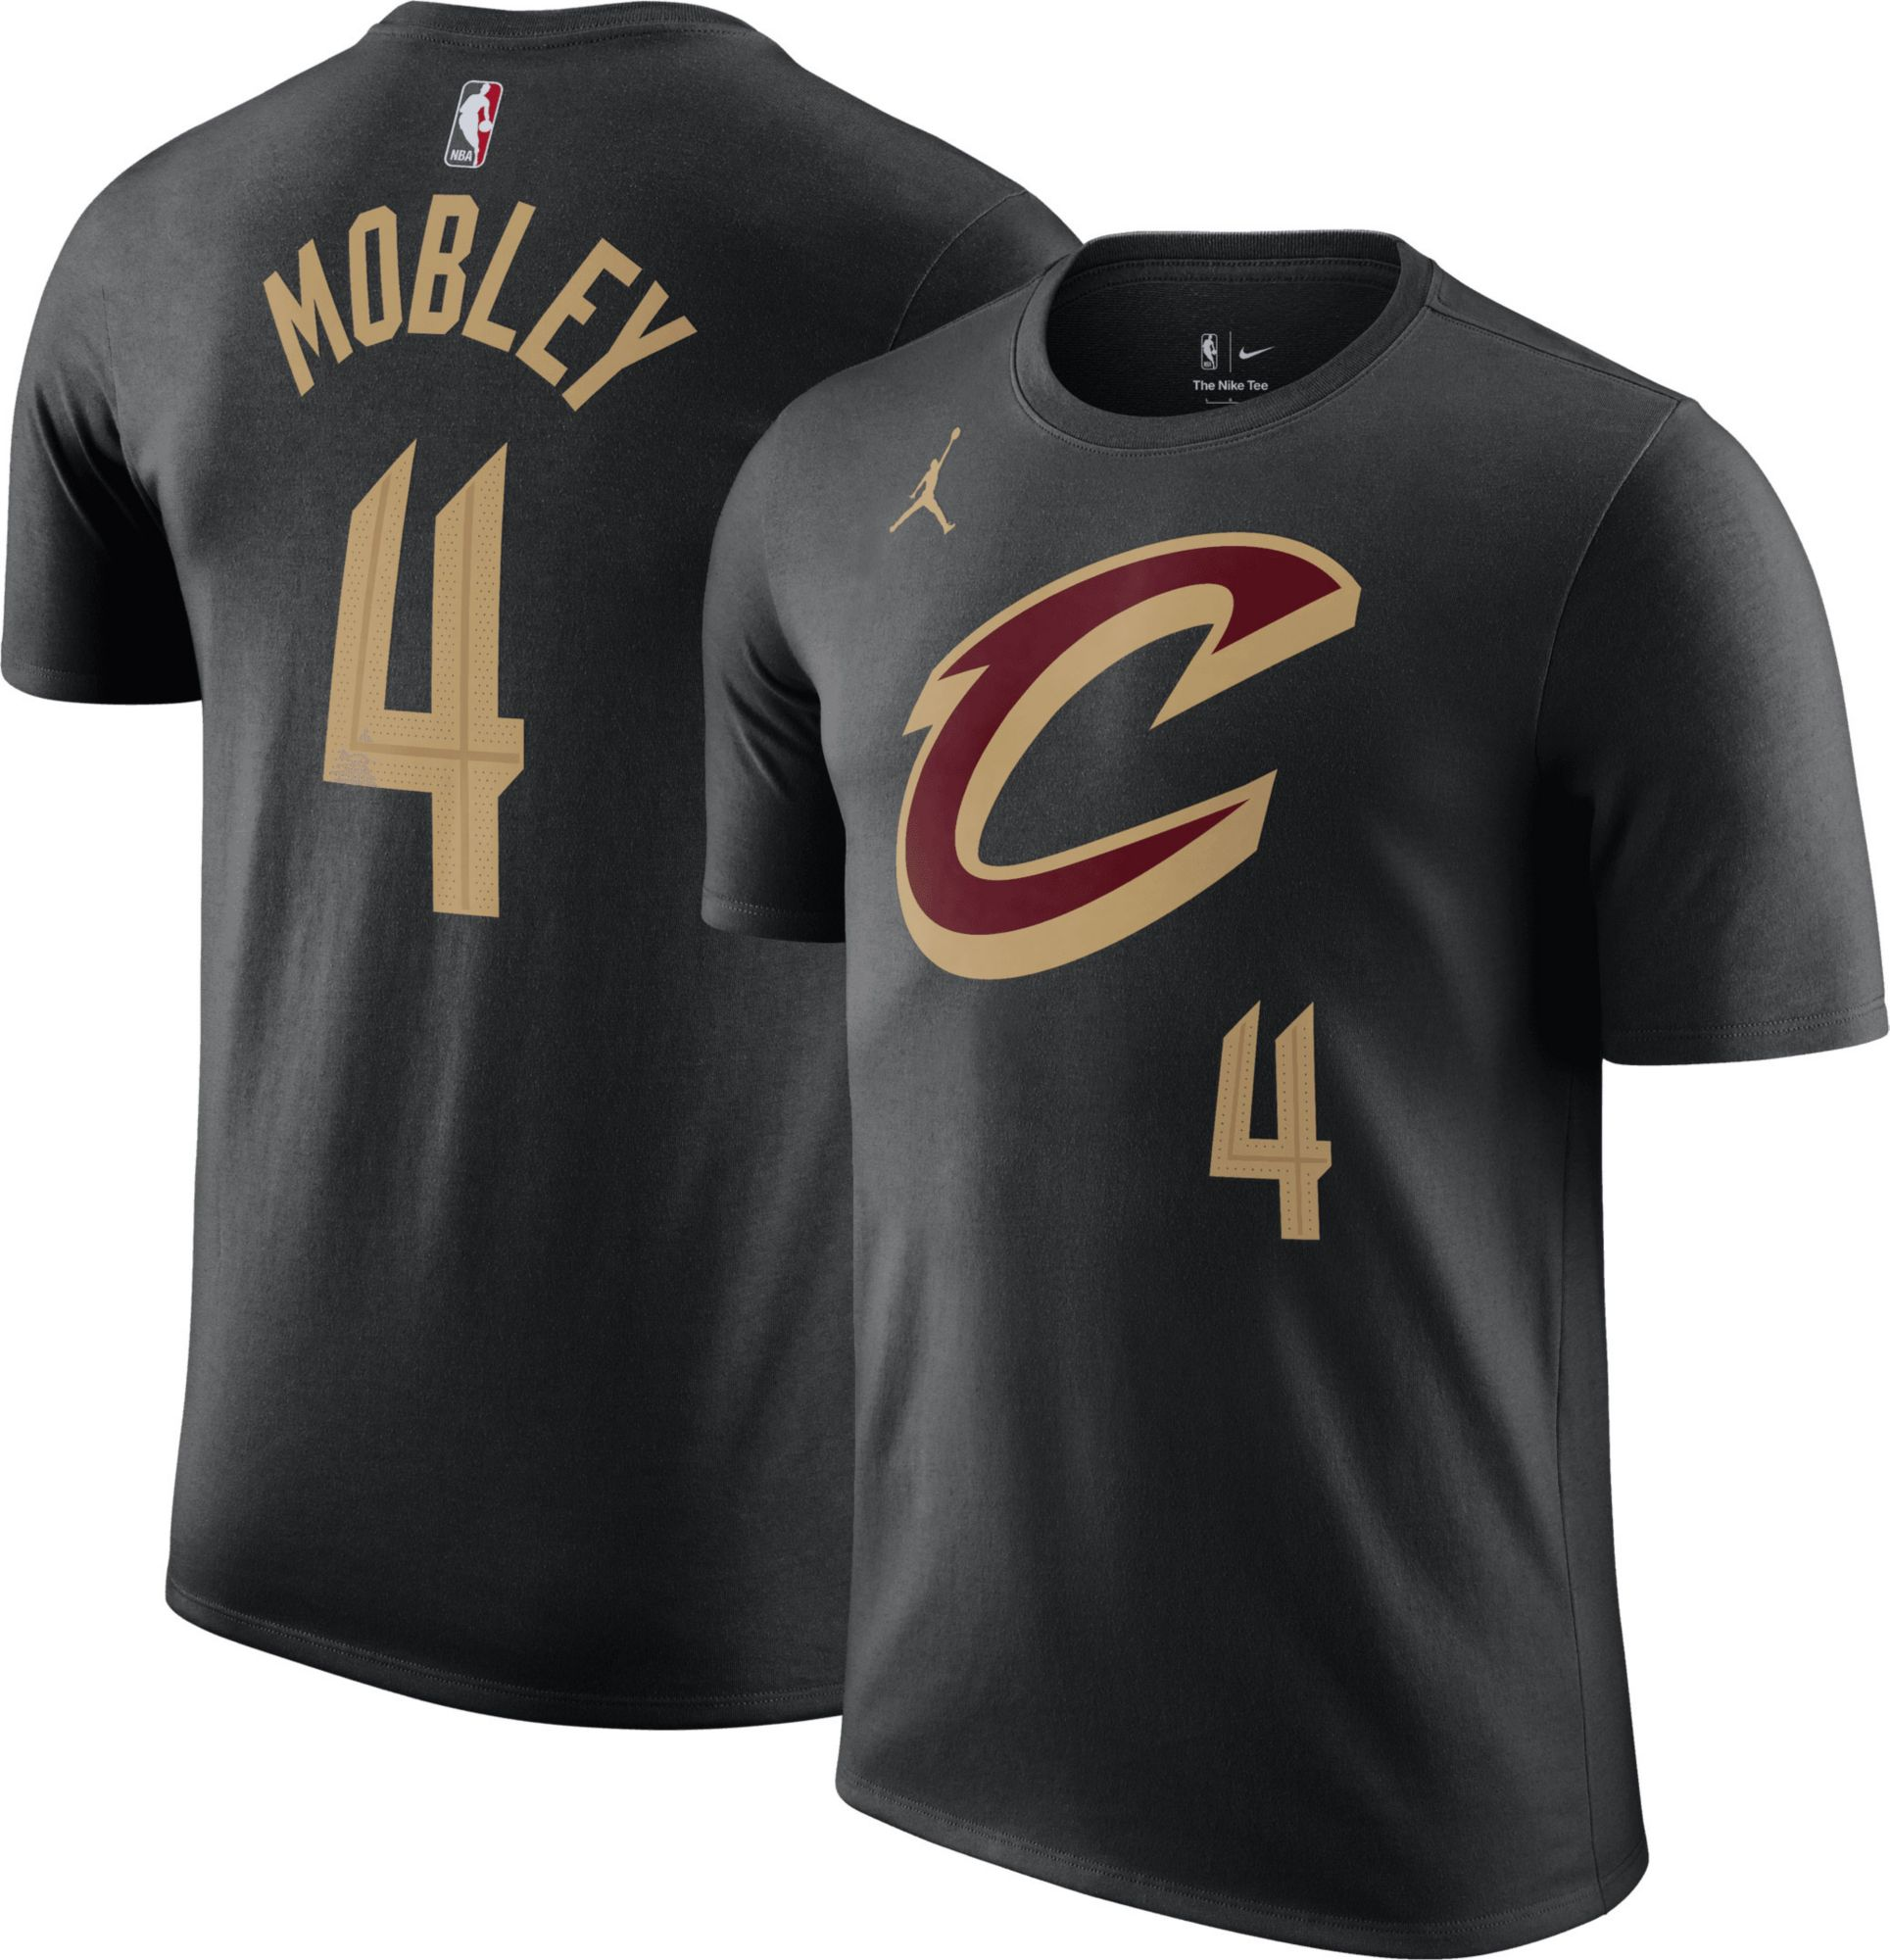 Nike Men's Cleveland Cavaliers Evan Mobley #4 Black T-Shirt, XXL